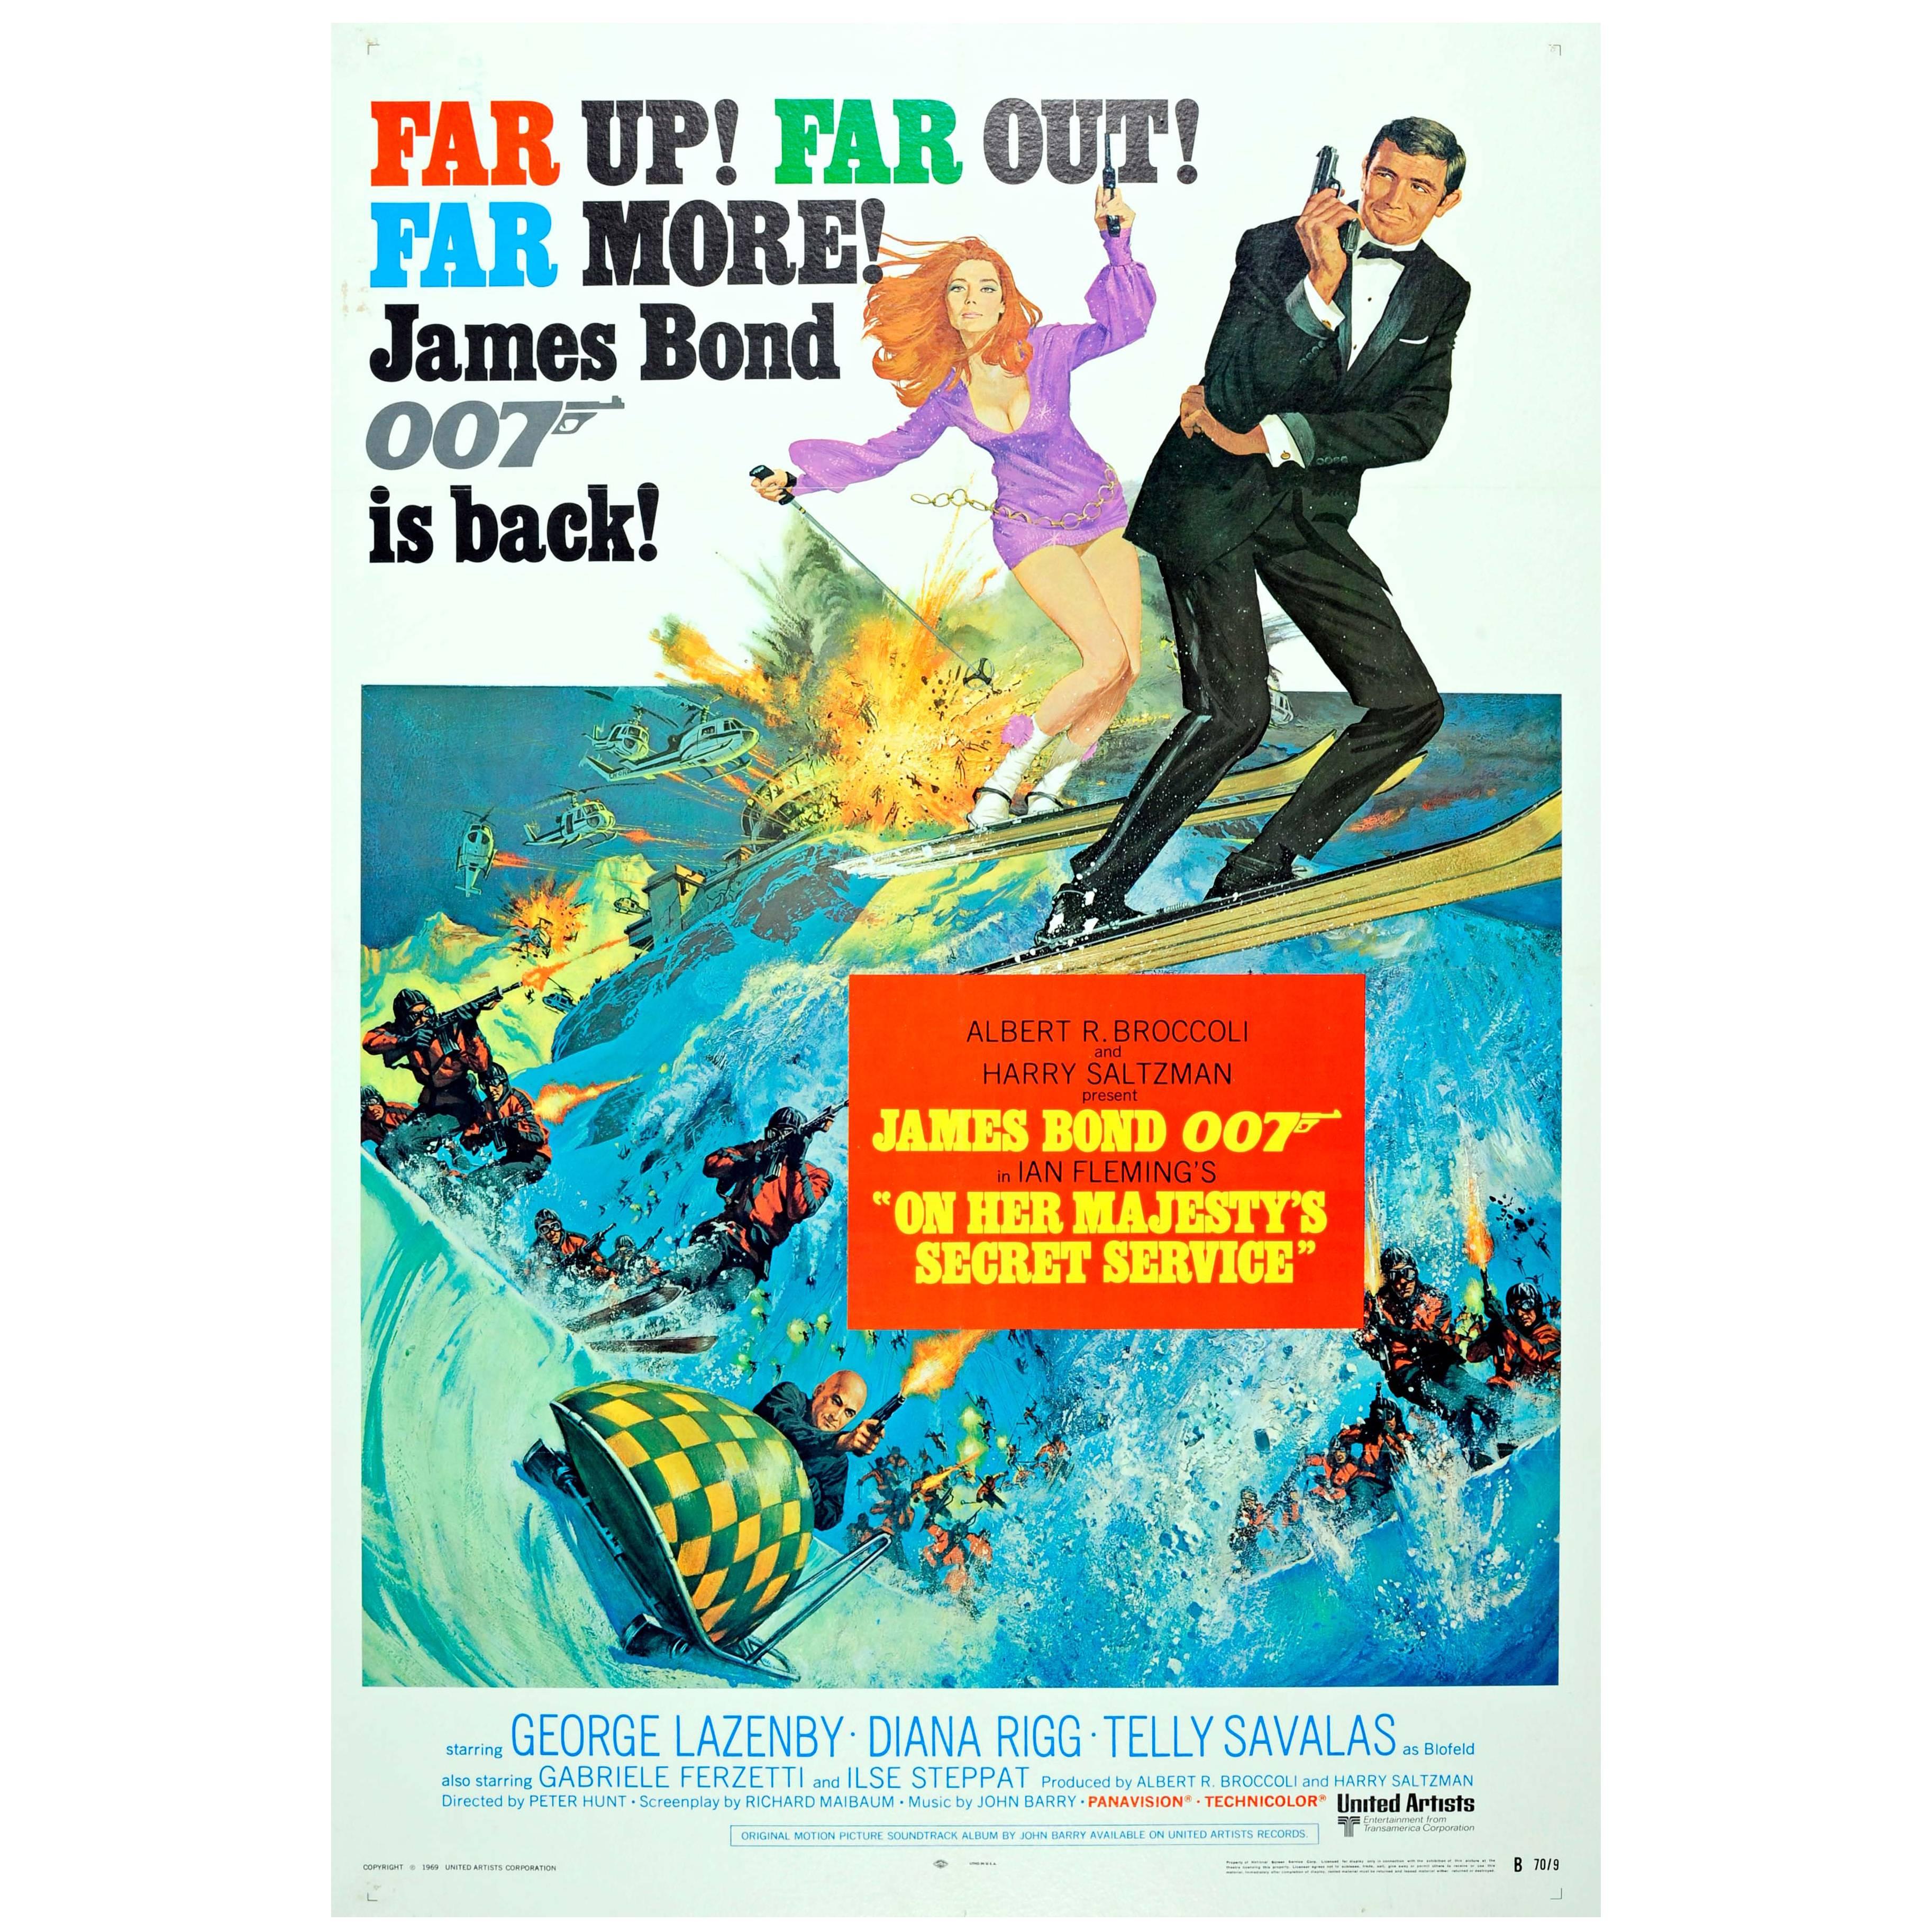 Original Vintage 007 James Bond Movie Poster “On Her Majesty's Secret Service”